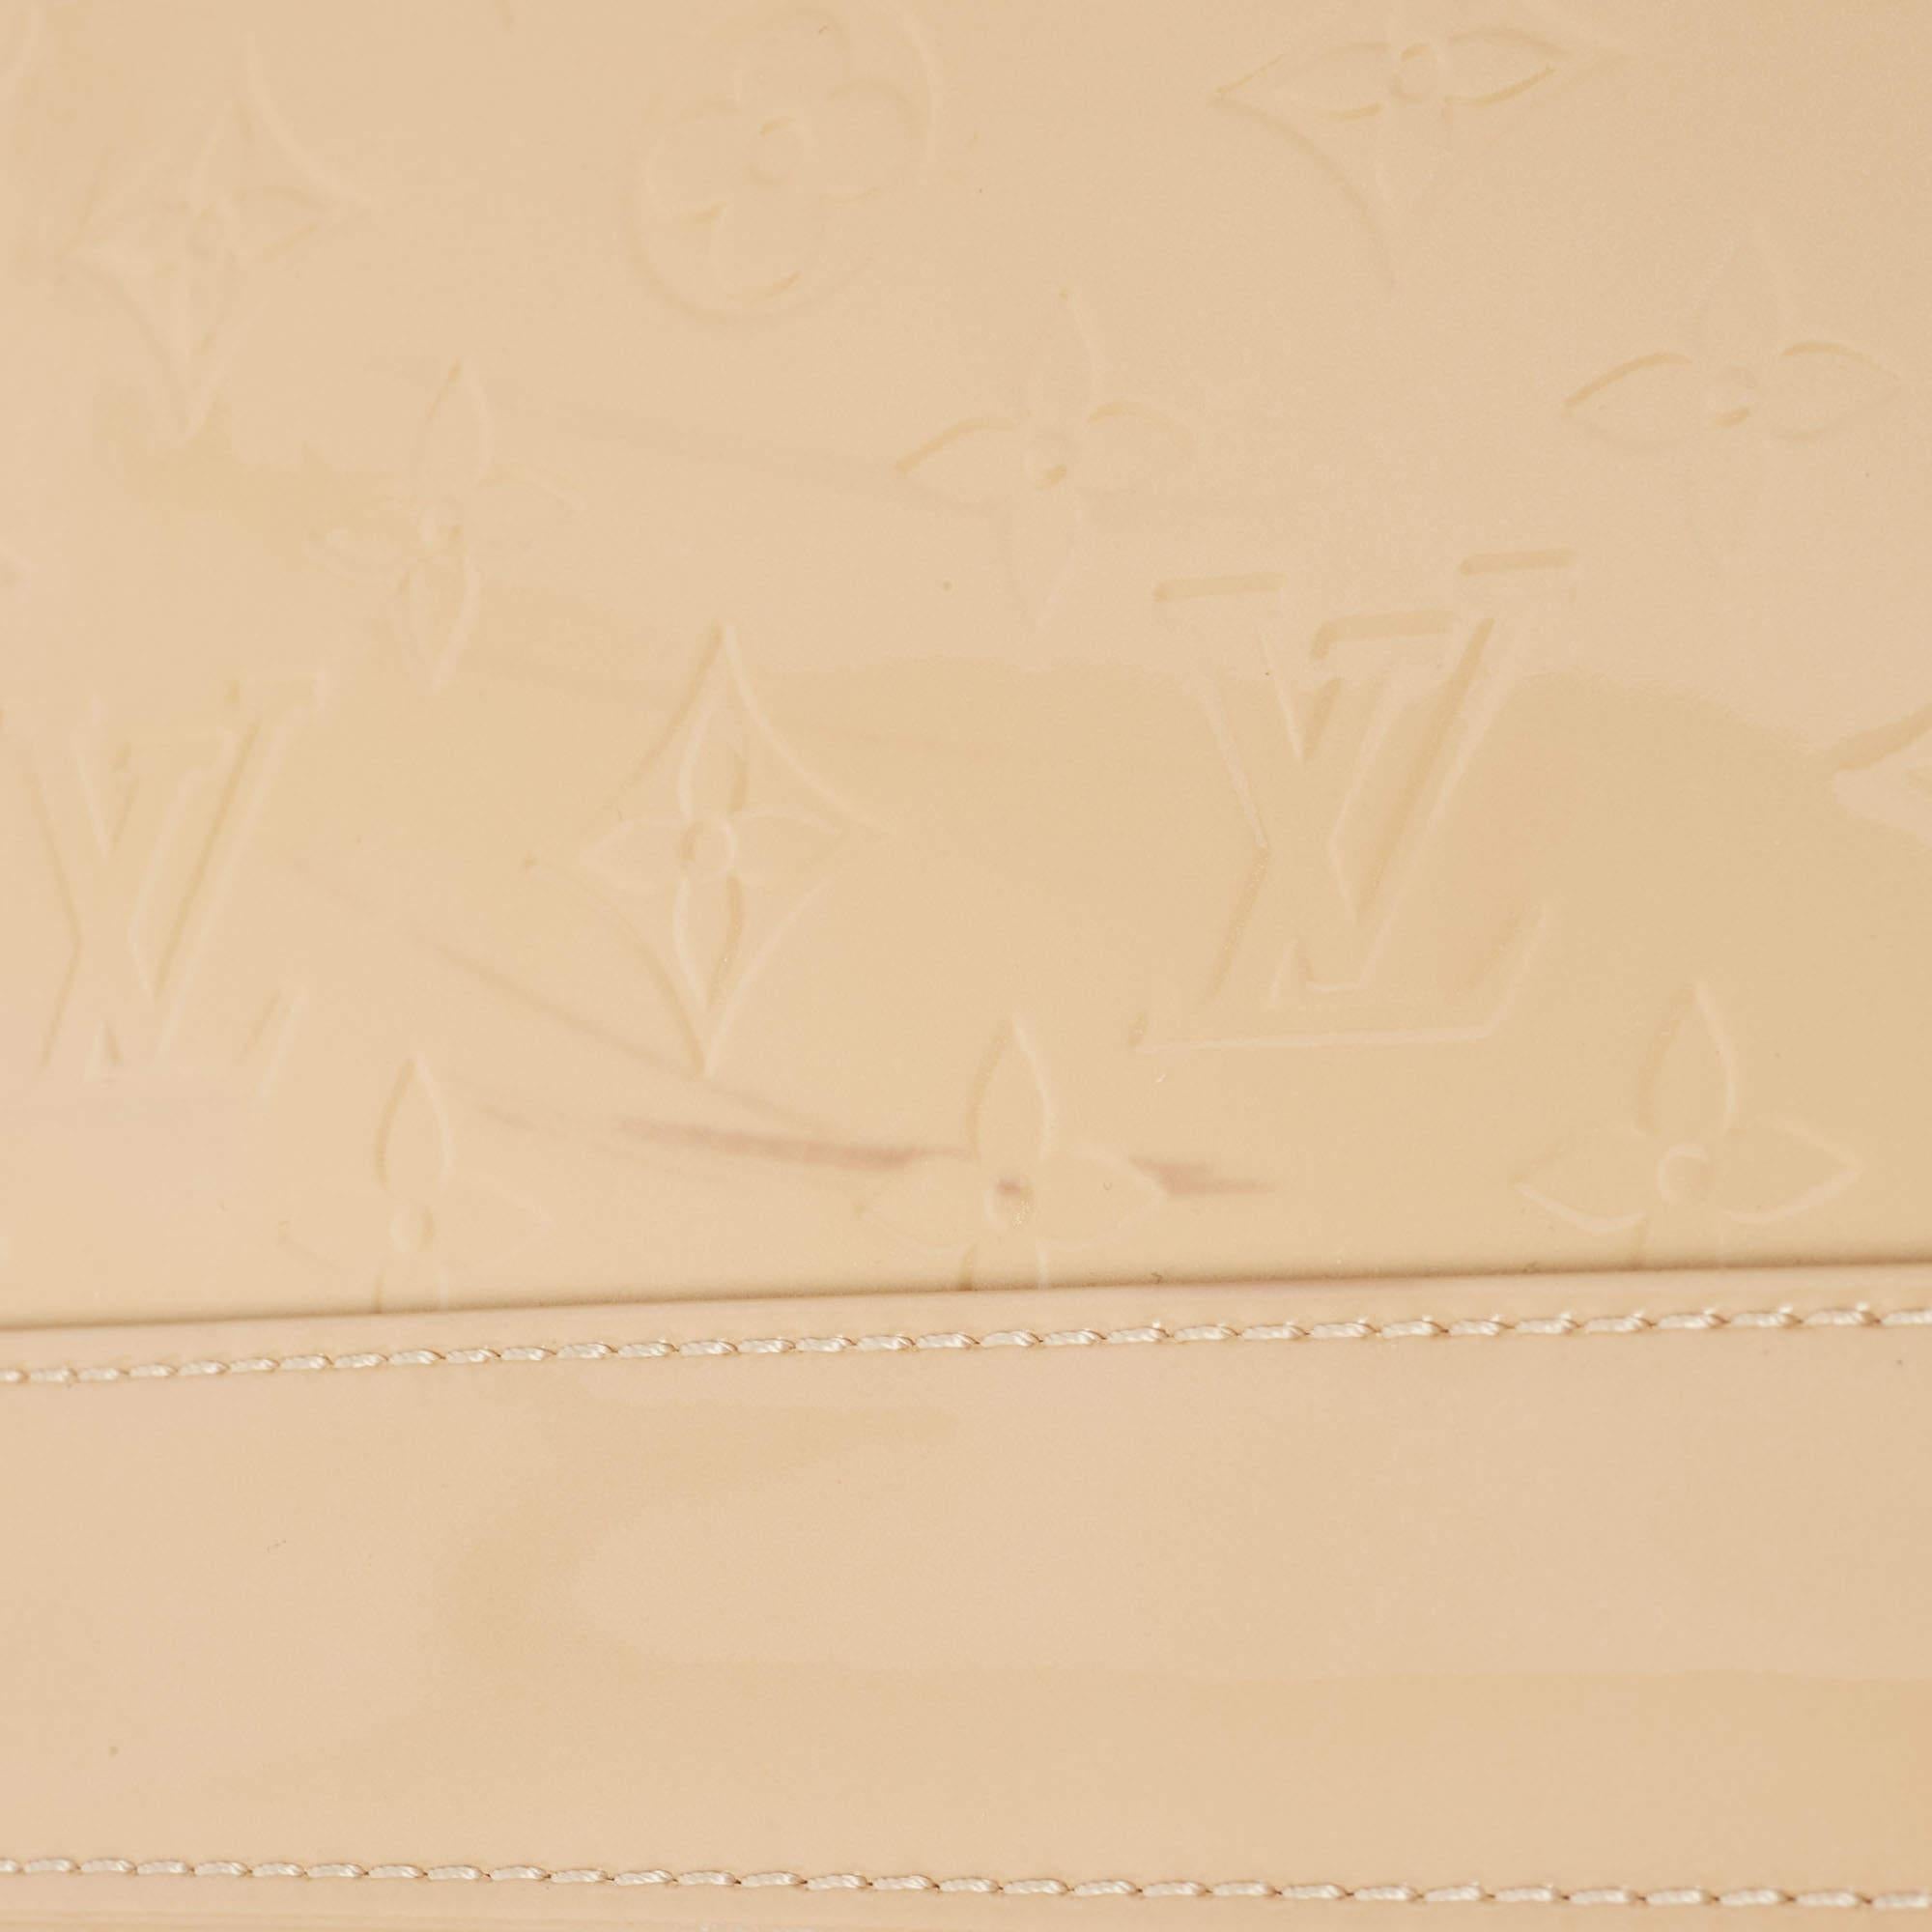 Louis Vuitton Rose Florentine Monogram Vernis Alma GM Bag For Sale 2